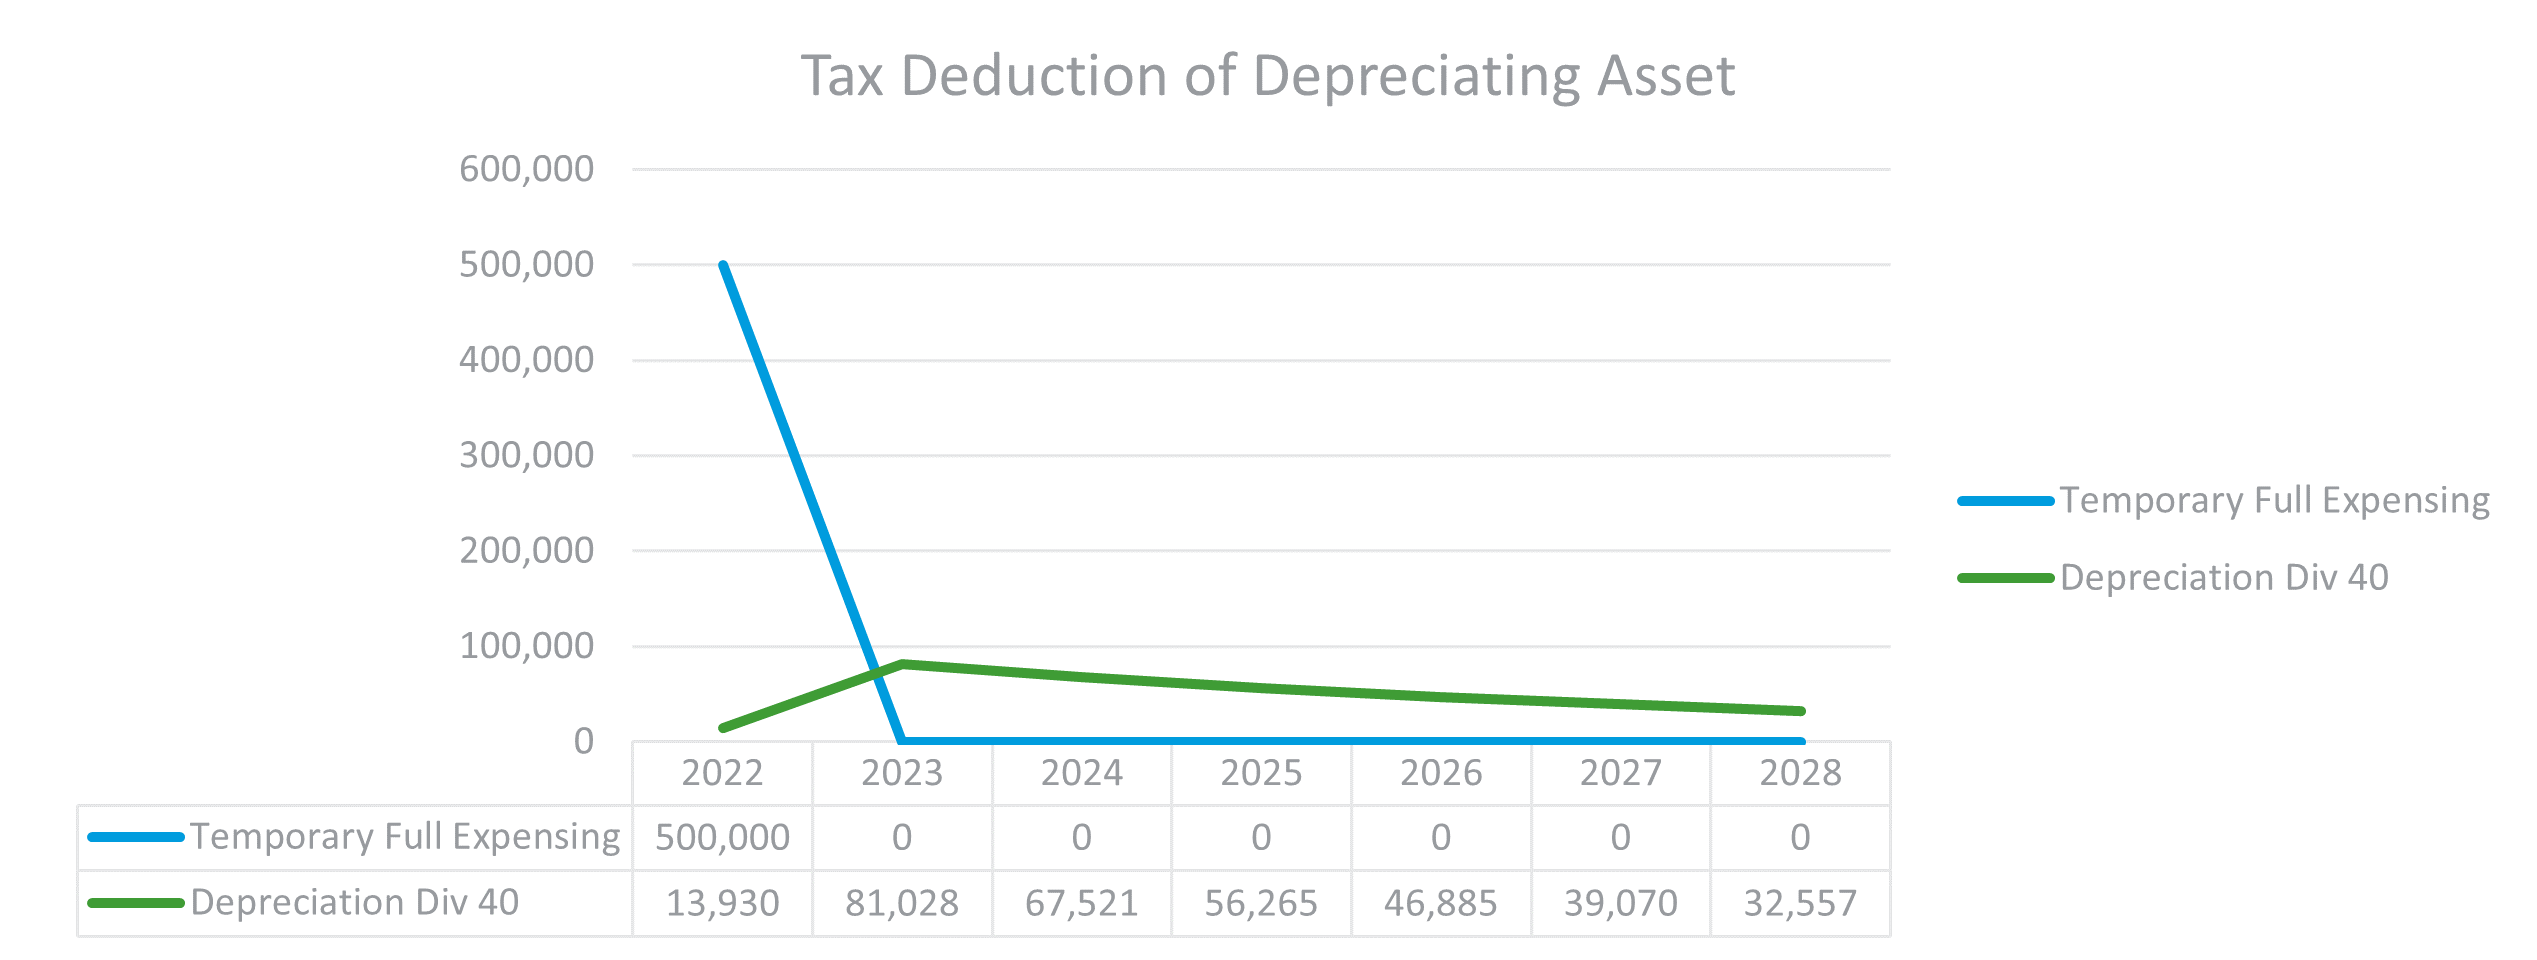 Comparison of TFE vs Div 40 depreciating asset